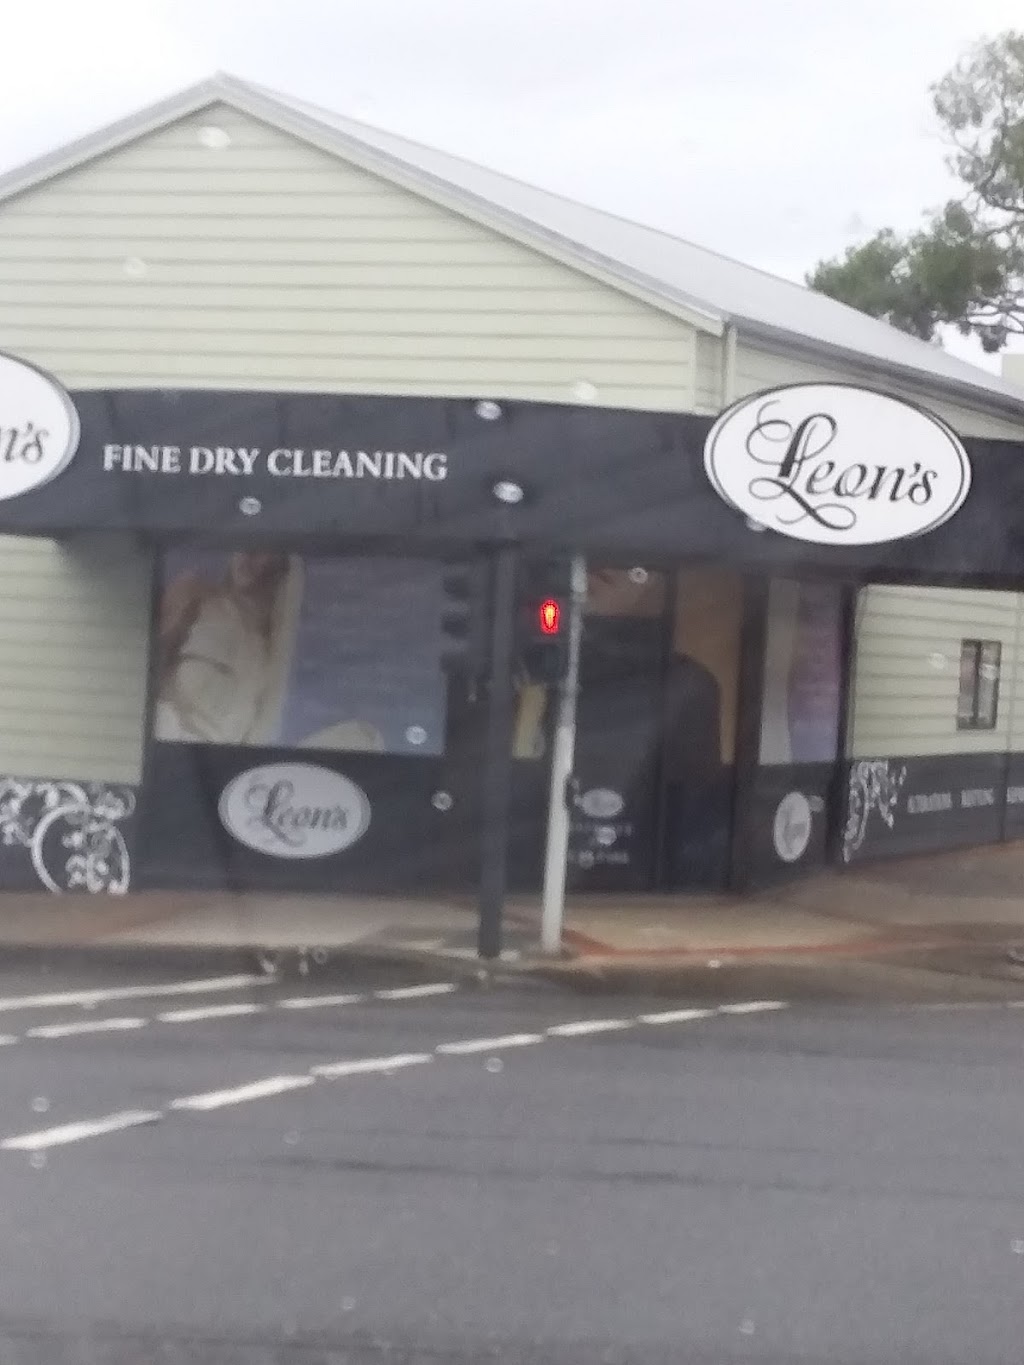 Leons Fine Dry Cleaning | 949 Stanley St E, East Brisbane QLD 4169, Australia | Phone: (07) 3391 1412